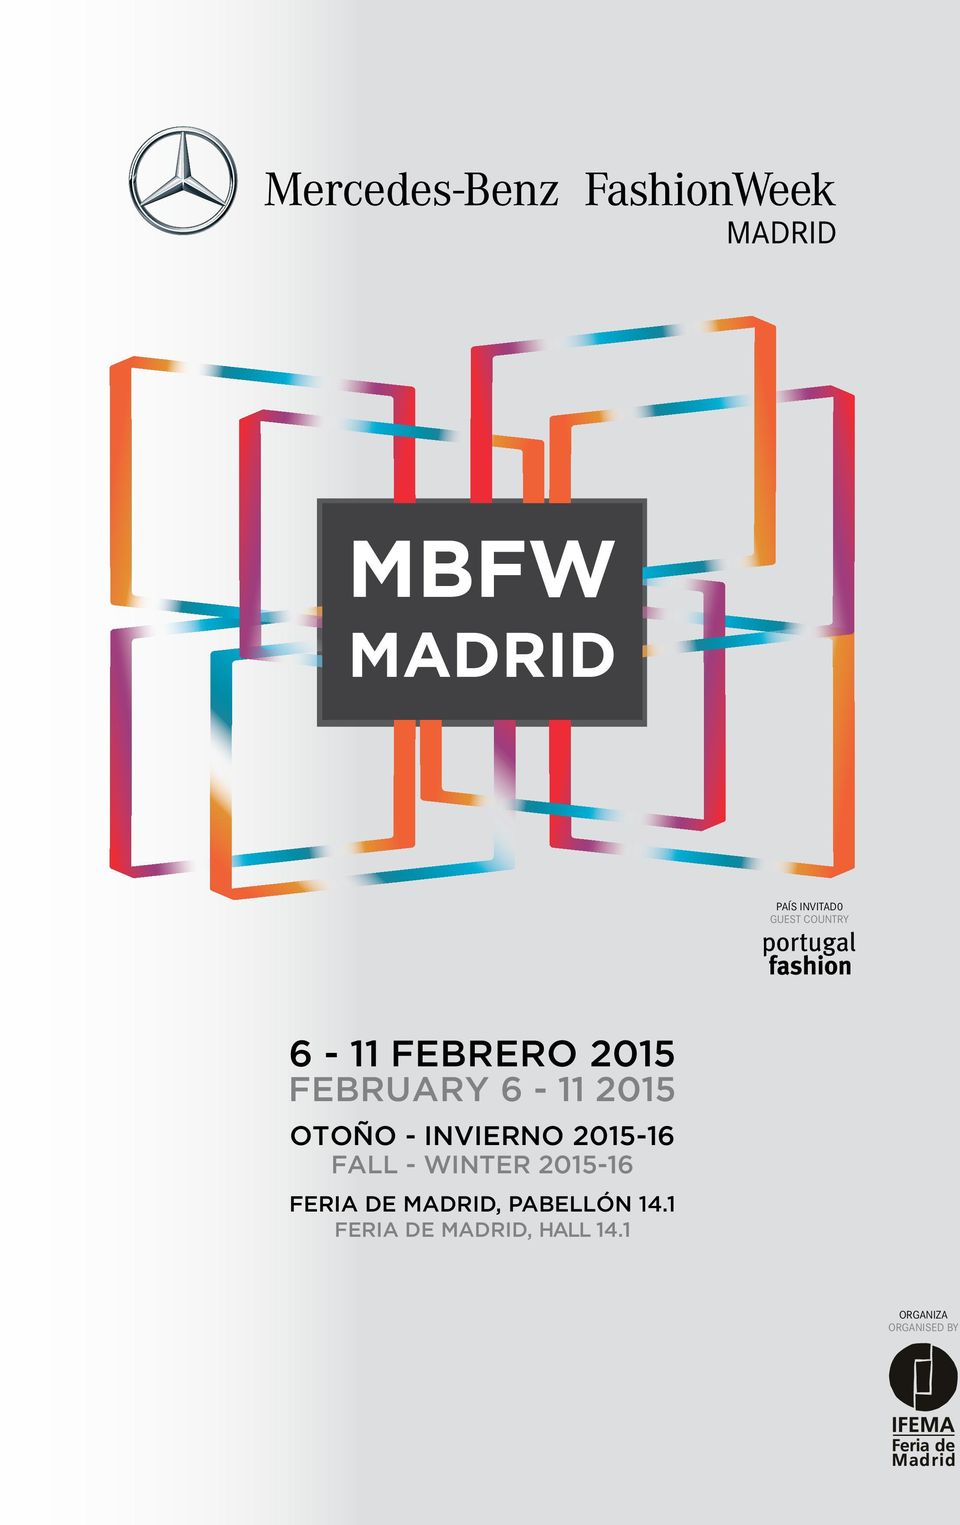 2015-16 FALL - WINTER 2015-16 FERIA DE MADRID,